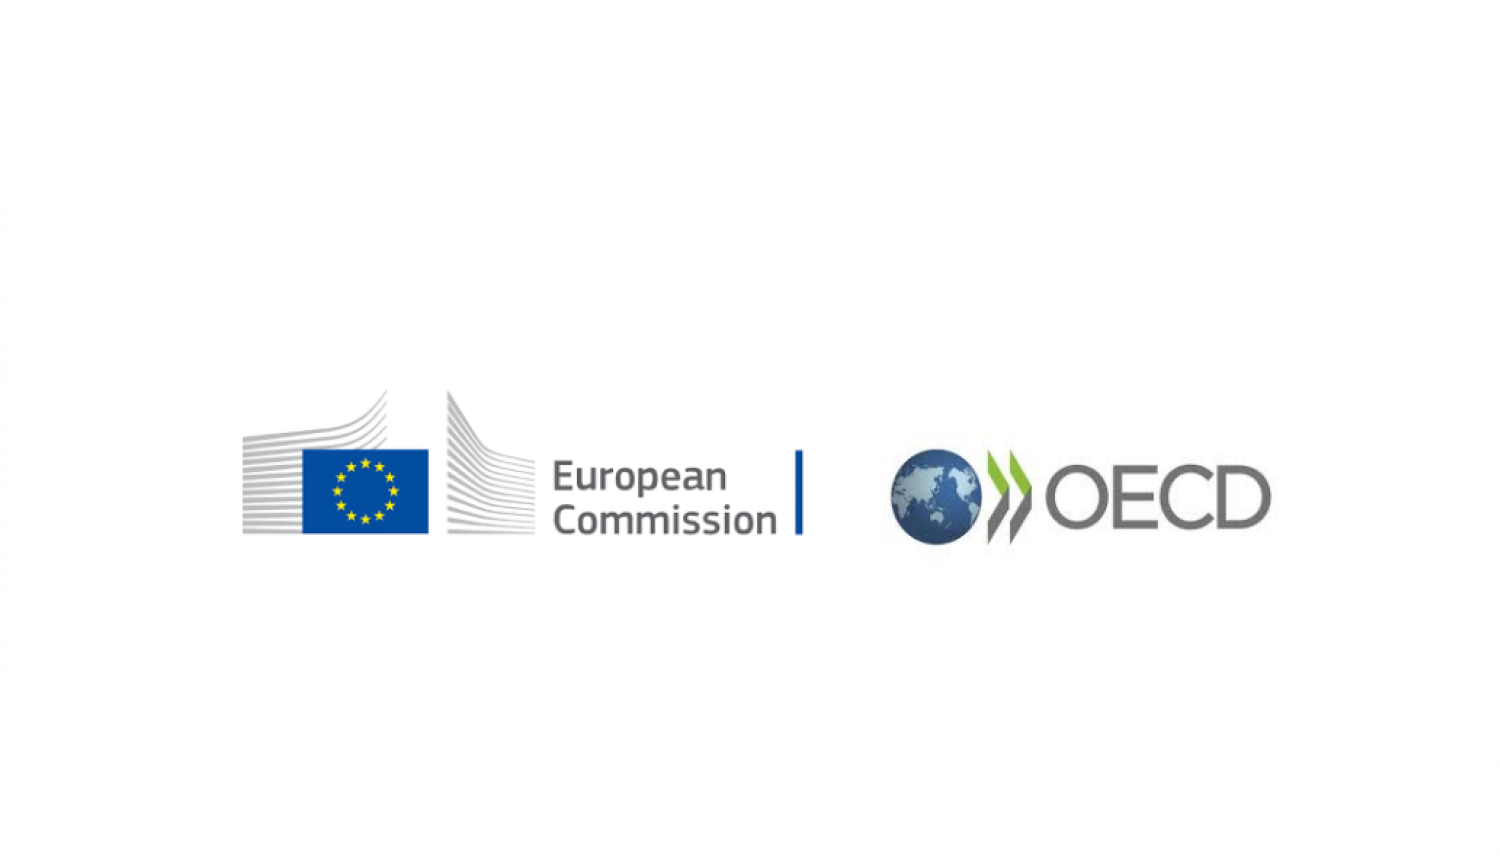 Eiropas Komisijas un OECD logo